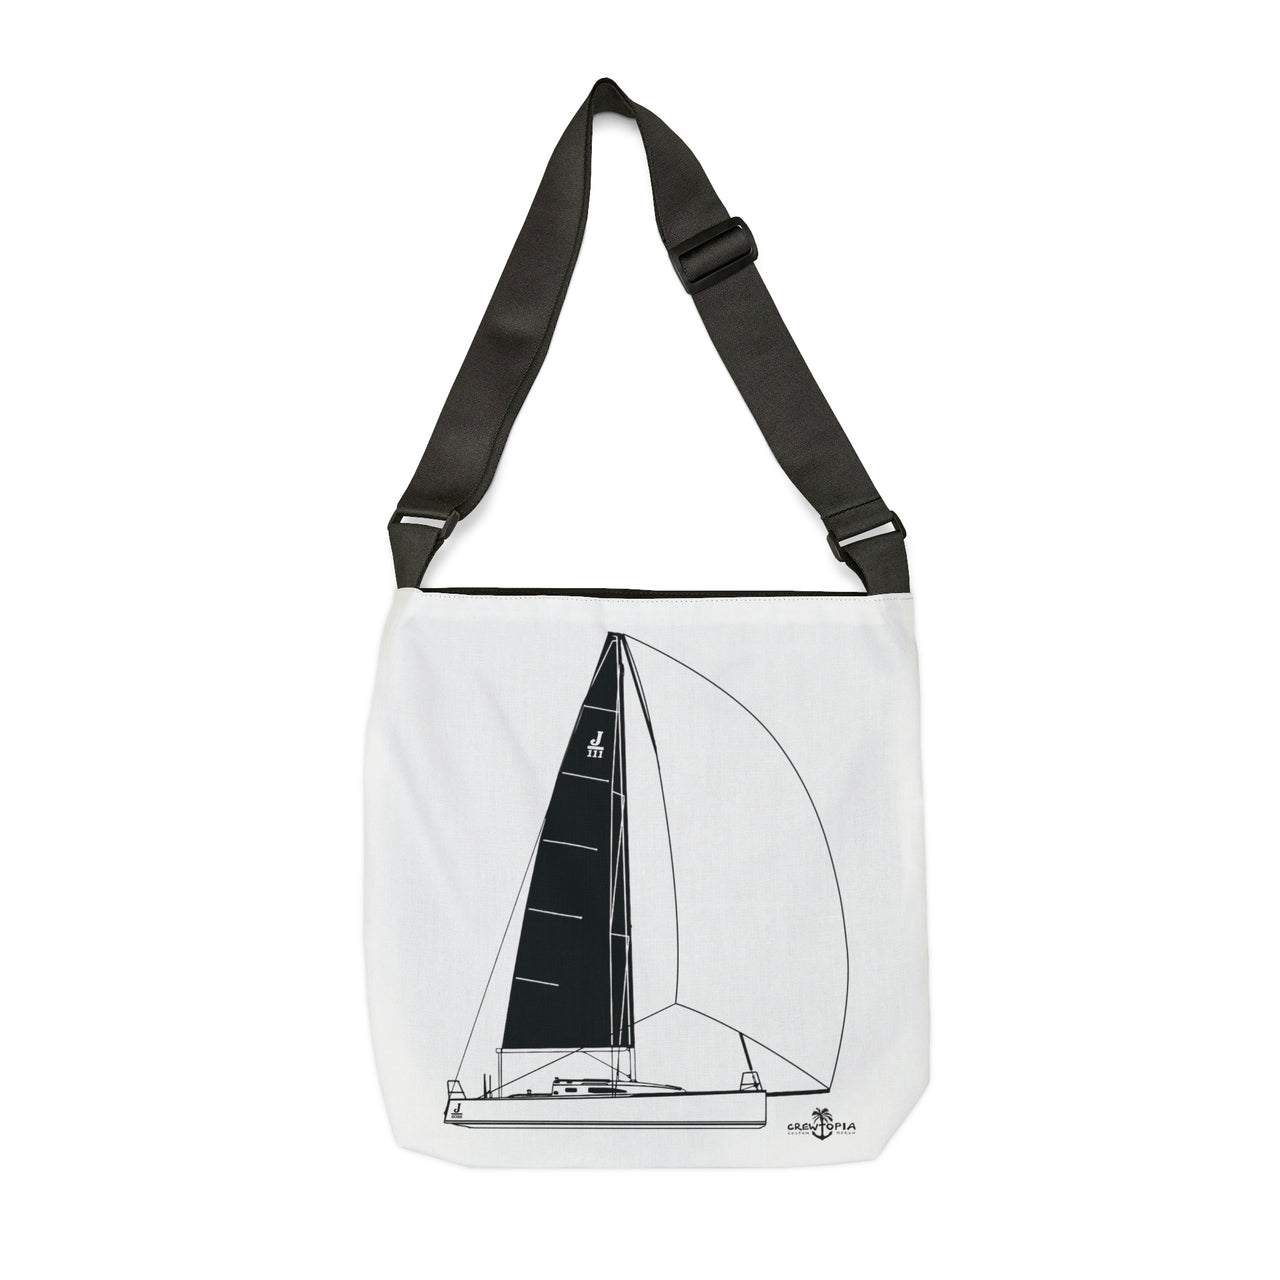 JBoss- Adjustable Tote Bag